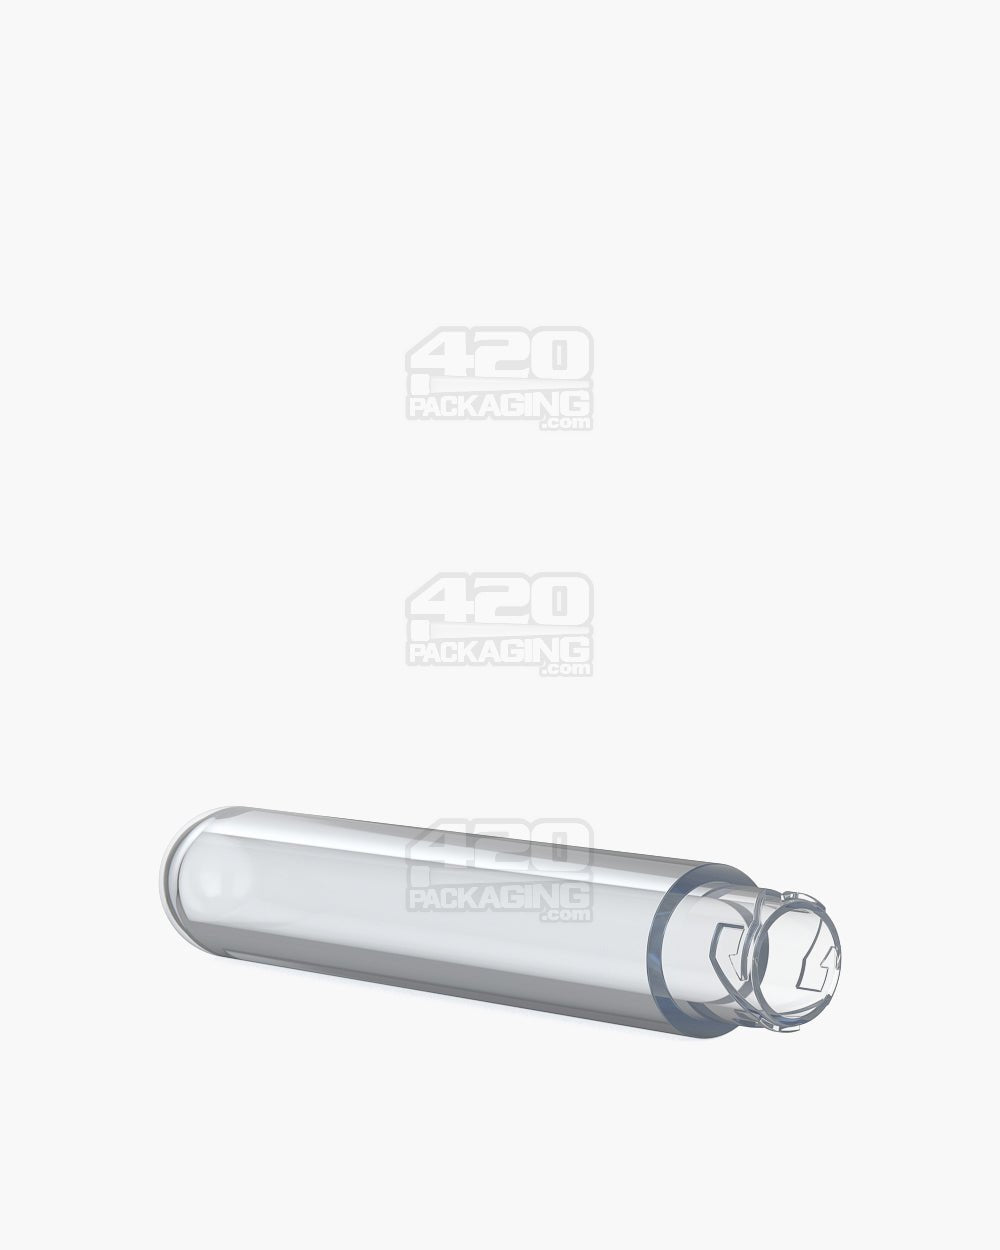 109mm Pollen Gear Transparent Plastic Slim Tube for Pre-Roll & Vaporizer Tube - Clear - 1000/Box - 4